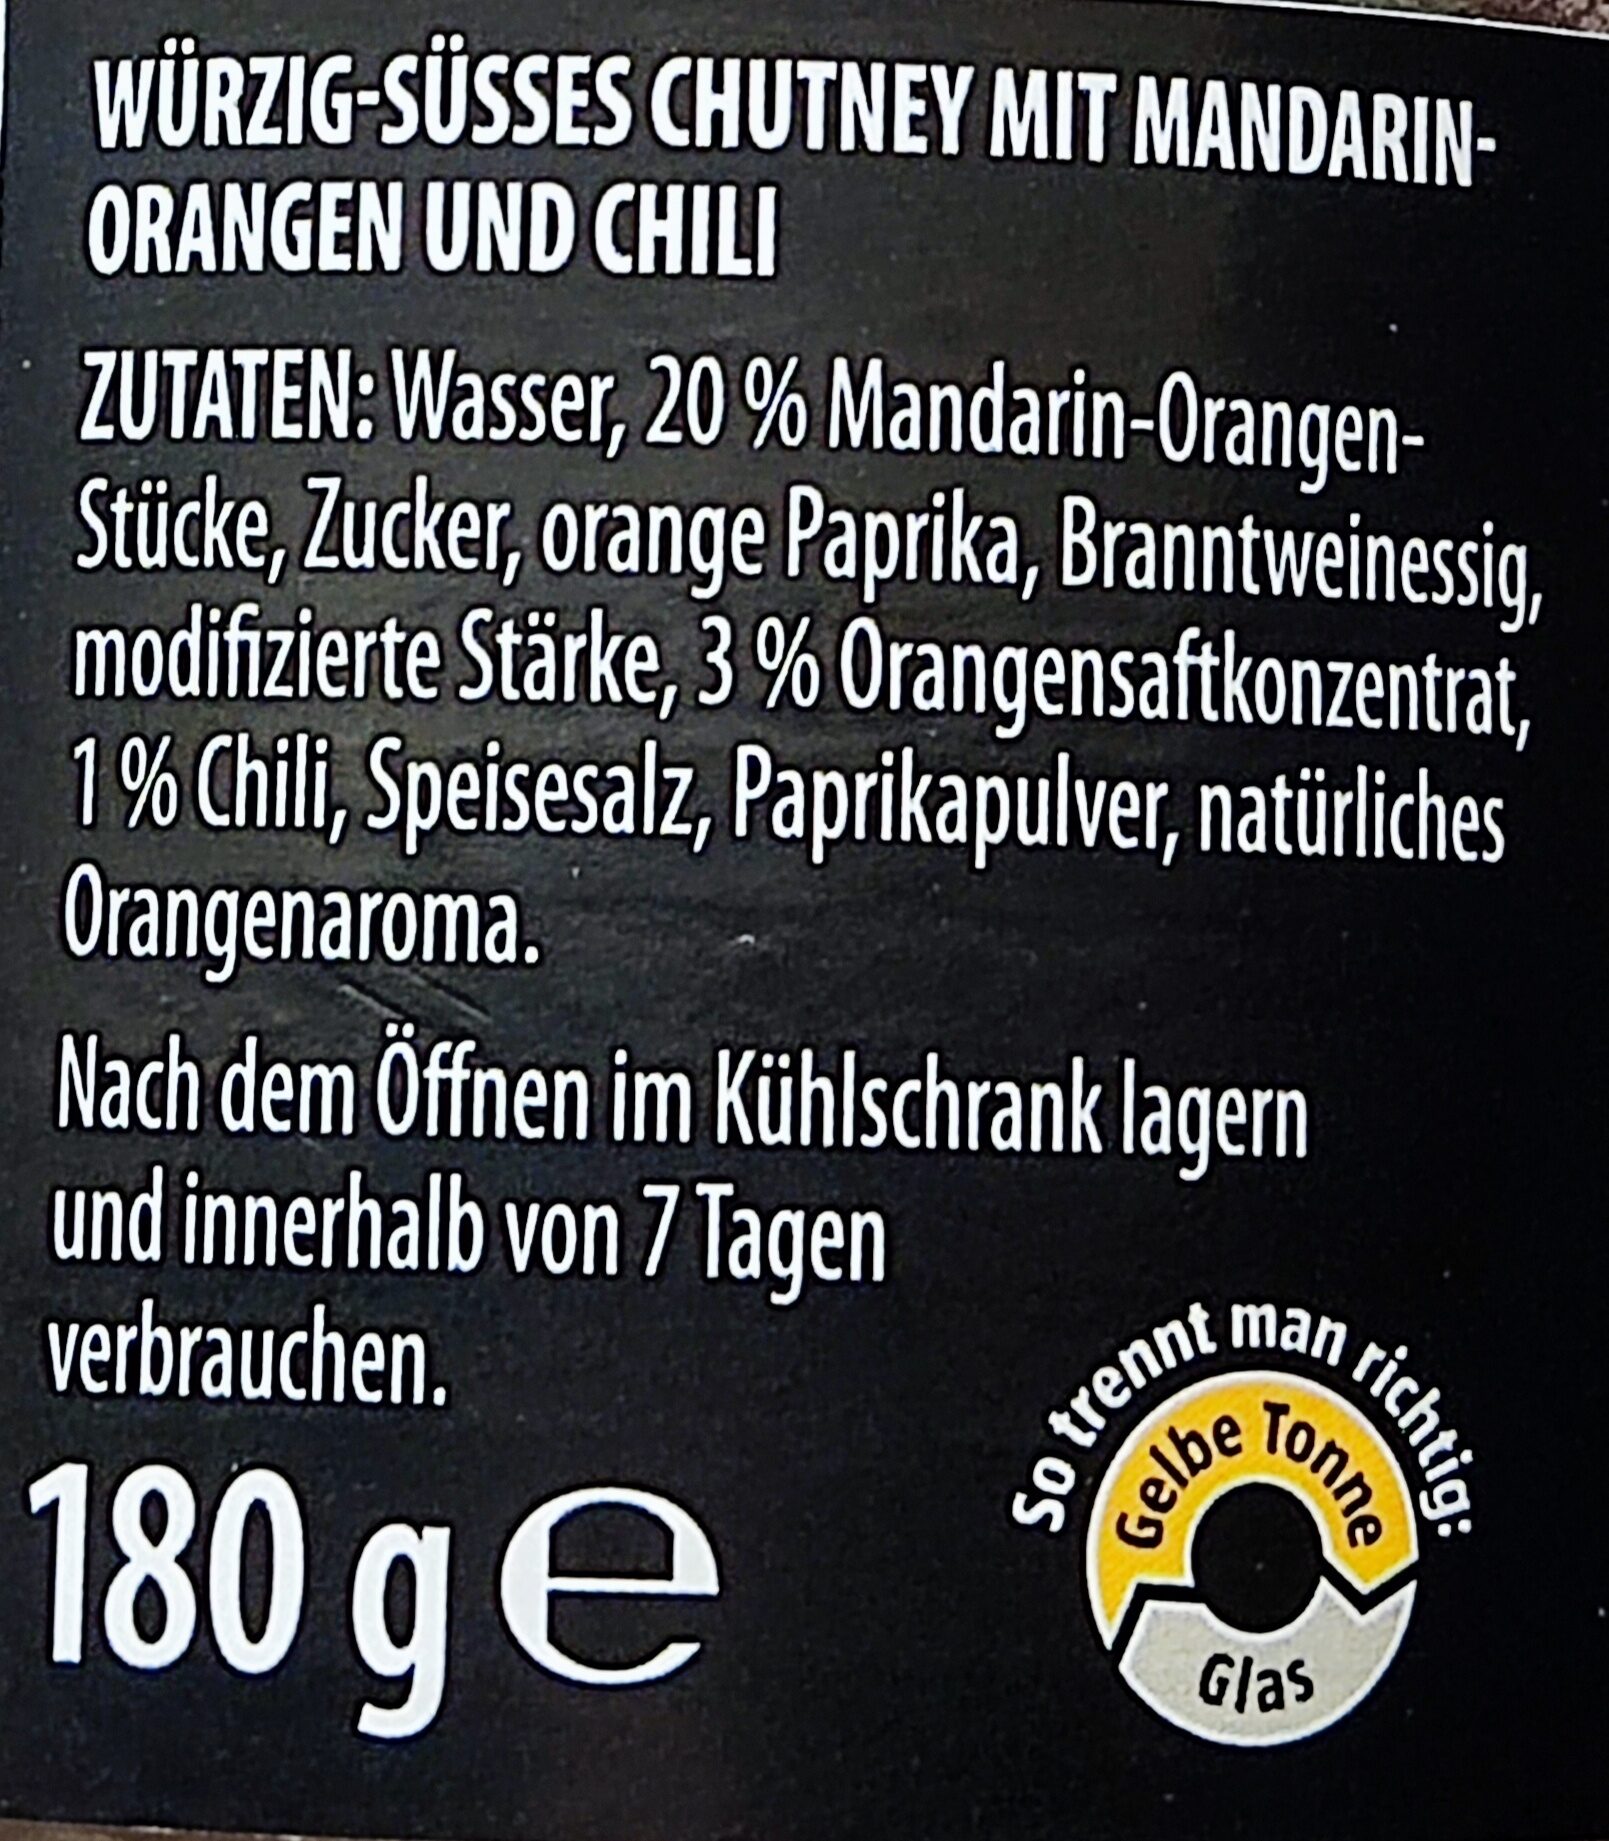 Chutney - Orangen-Chili - Ingredients - de